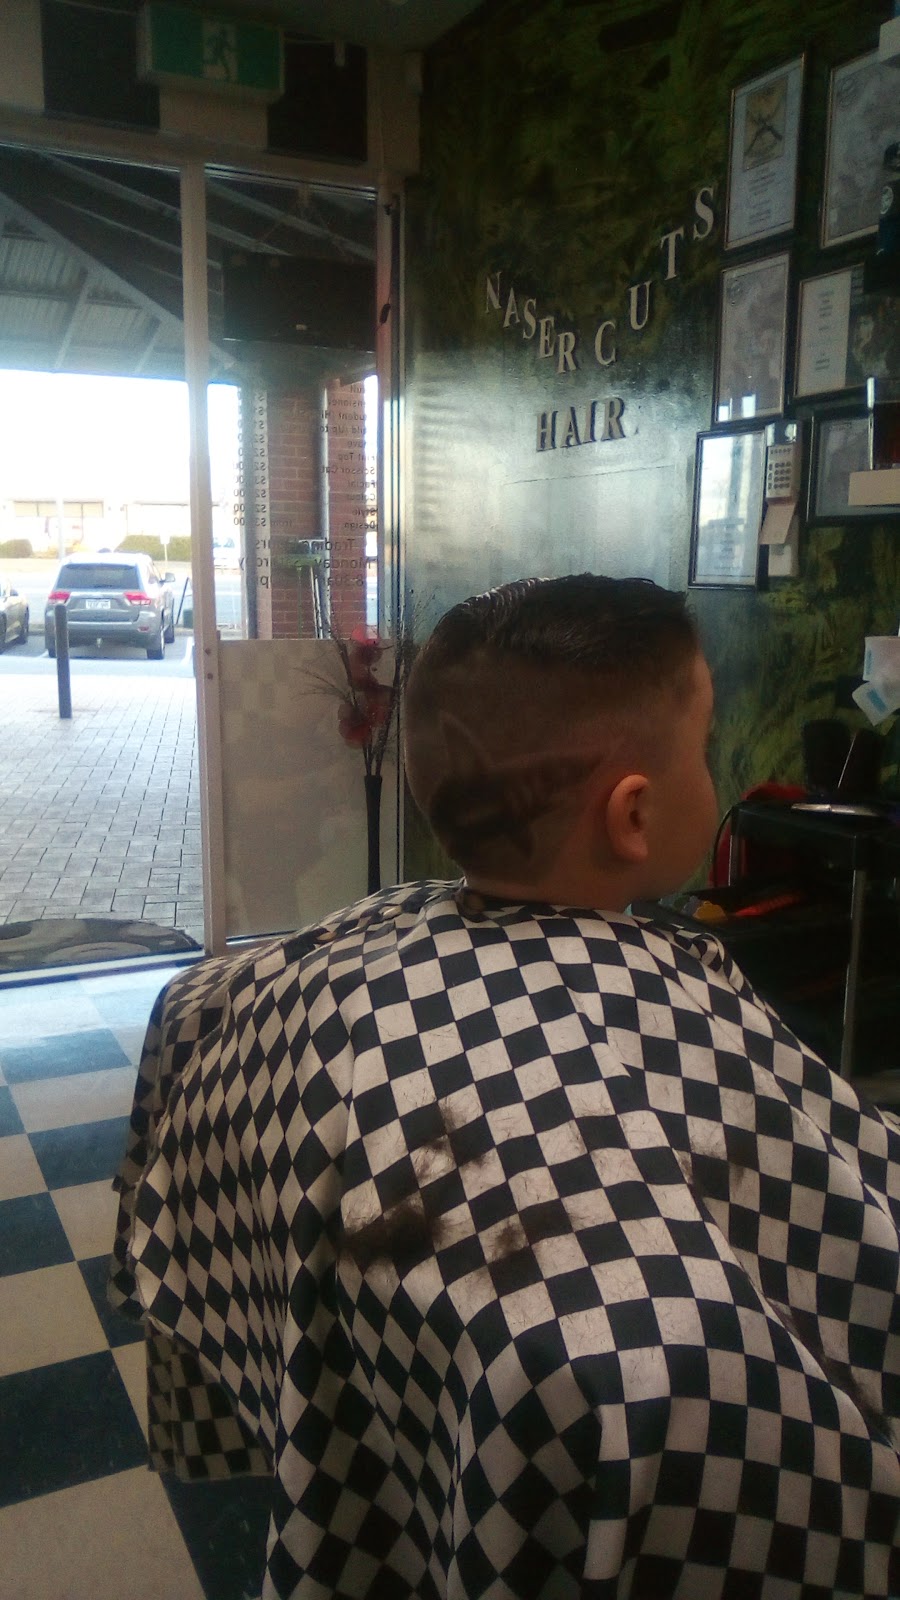 Naser Haircuts | 8c/233 Berrigan Dr, Jandakot WA 6164, Australia | Phone: 0402 210 969